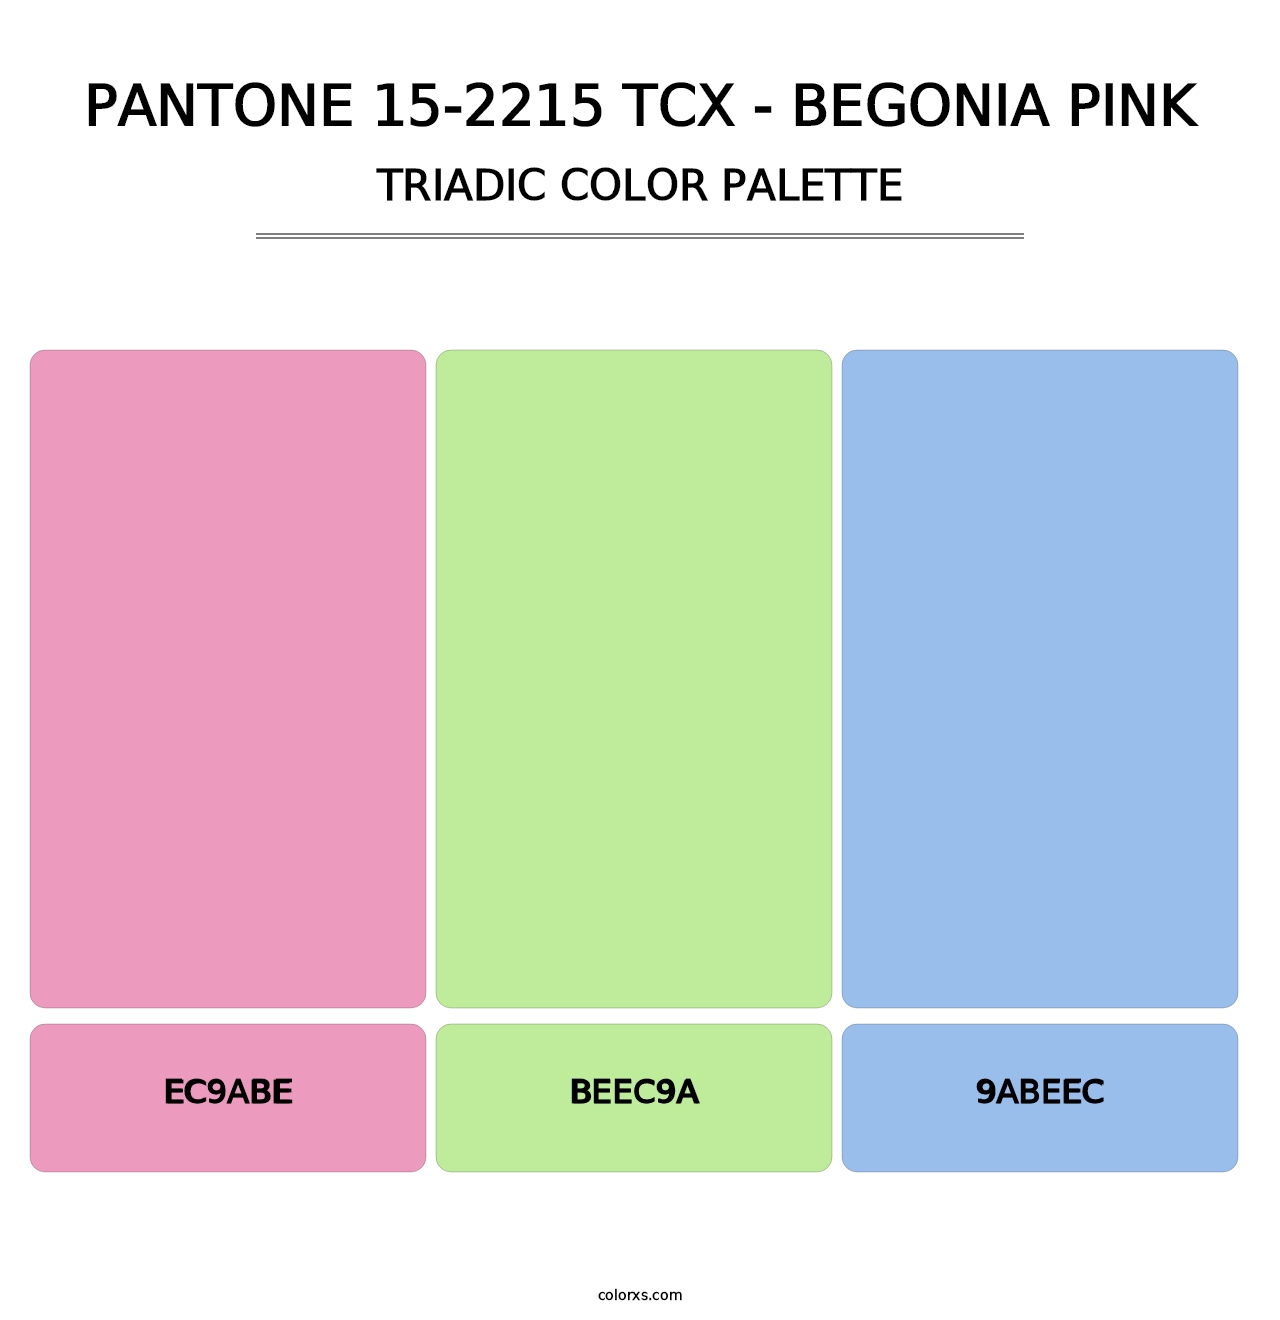 PANTONE 15-2215 TCX - Begonia Pink - Triadic Color Palette